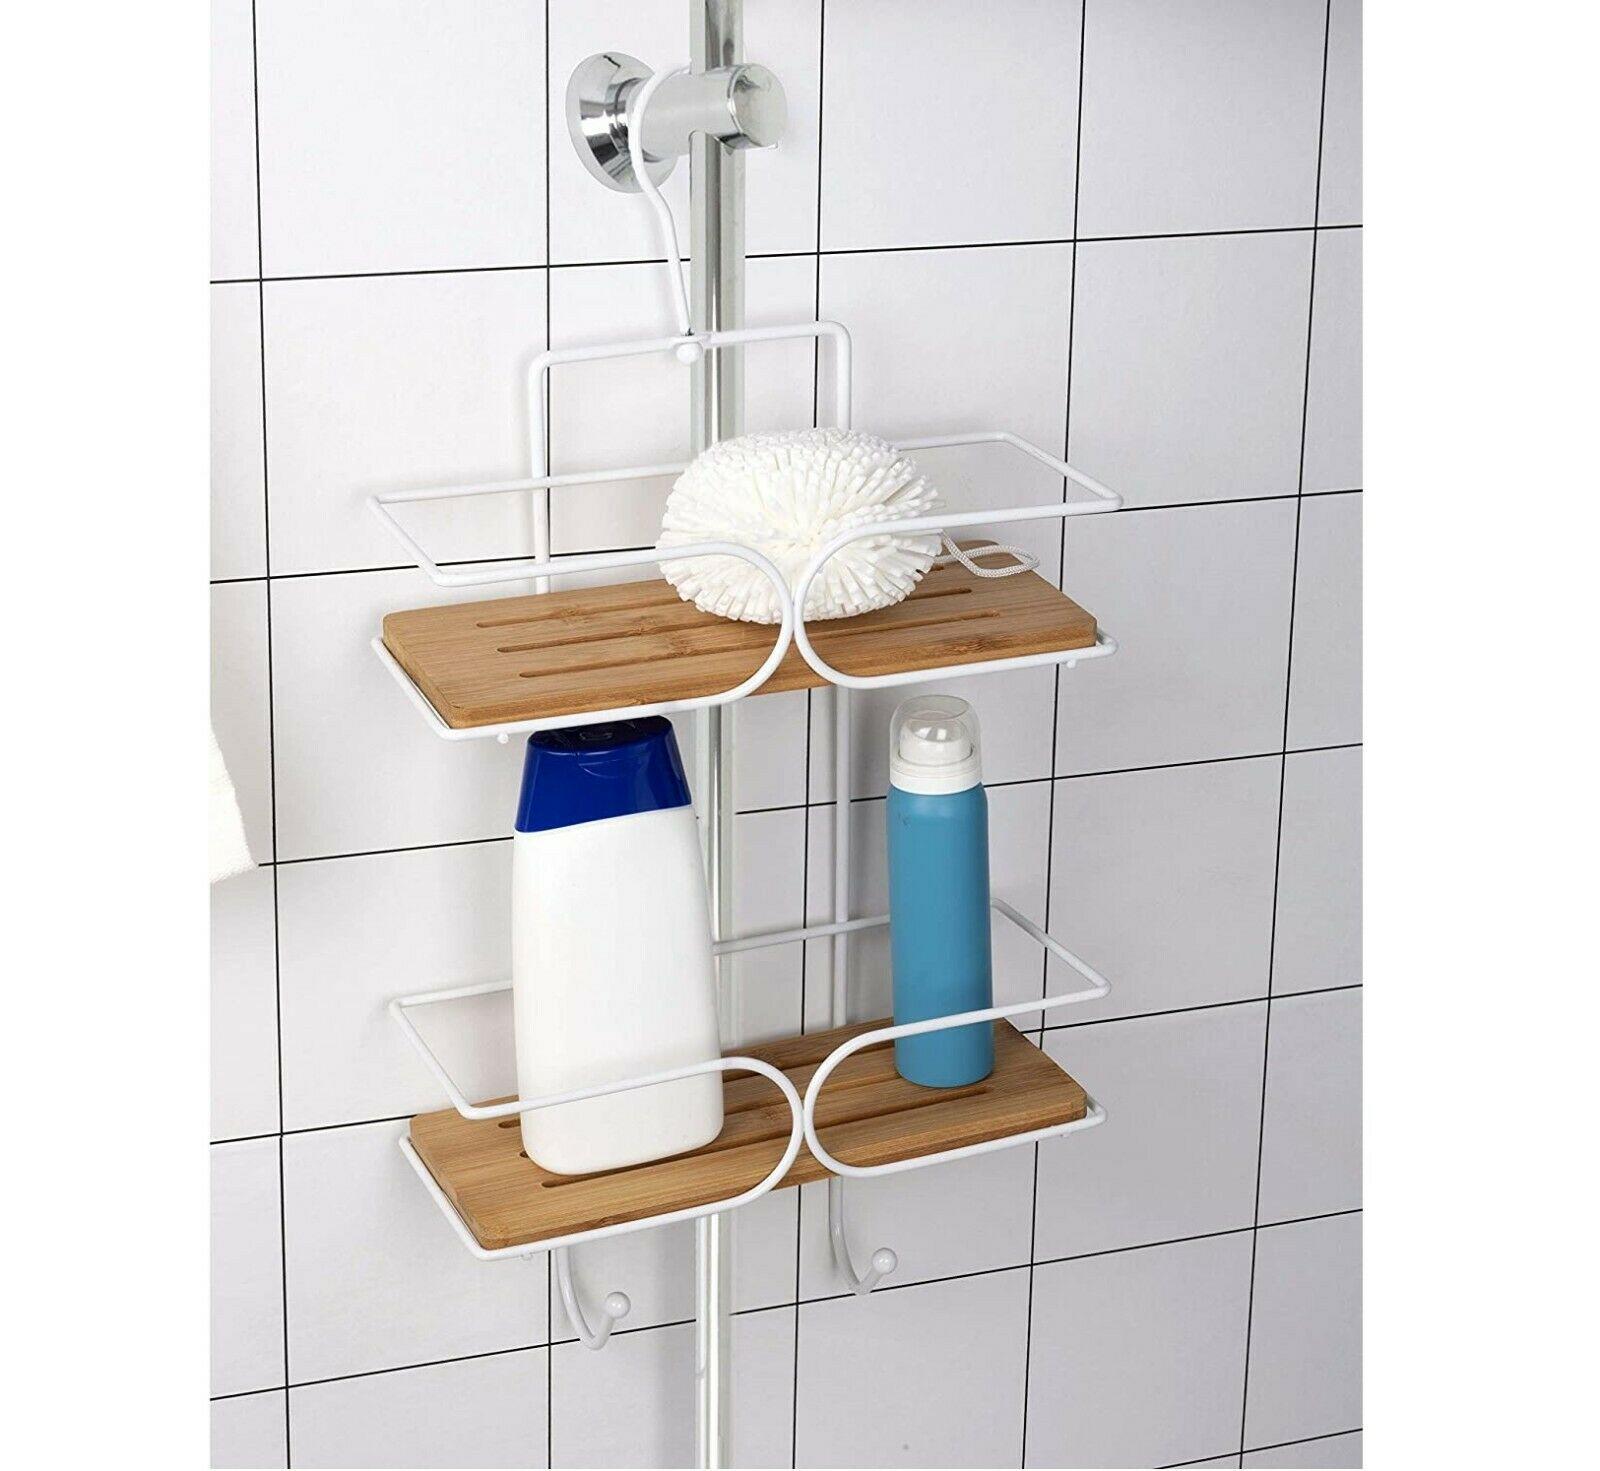 Details about   Wall Shower Caddy Corner Storage Holder Rack Organiser Bathroom Self-Adhesive 